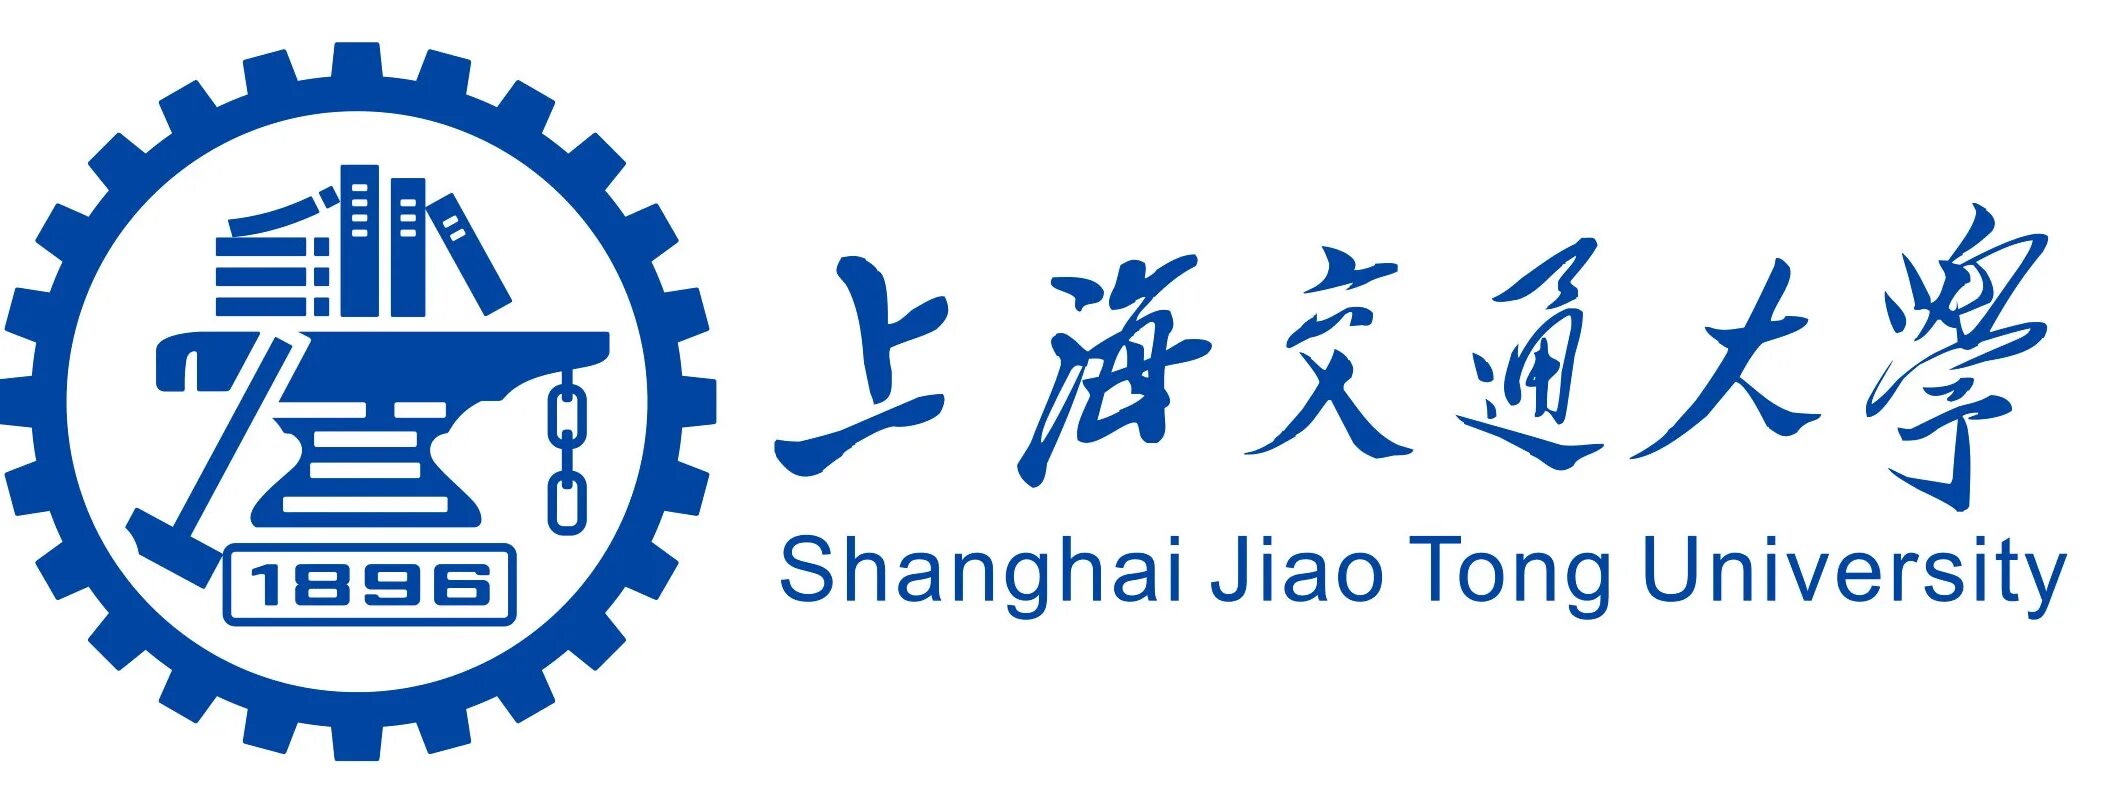 Шанхай Jiaotong  университет. Shanghai Jiao Tong University лого. Шанхайский институт логотипы. Шанхайский университет герб.